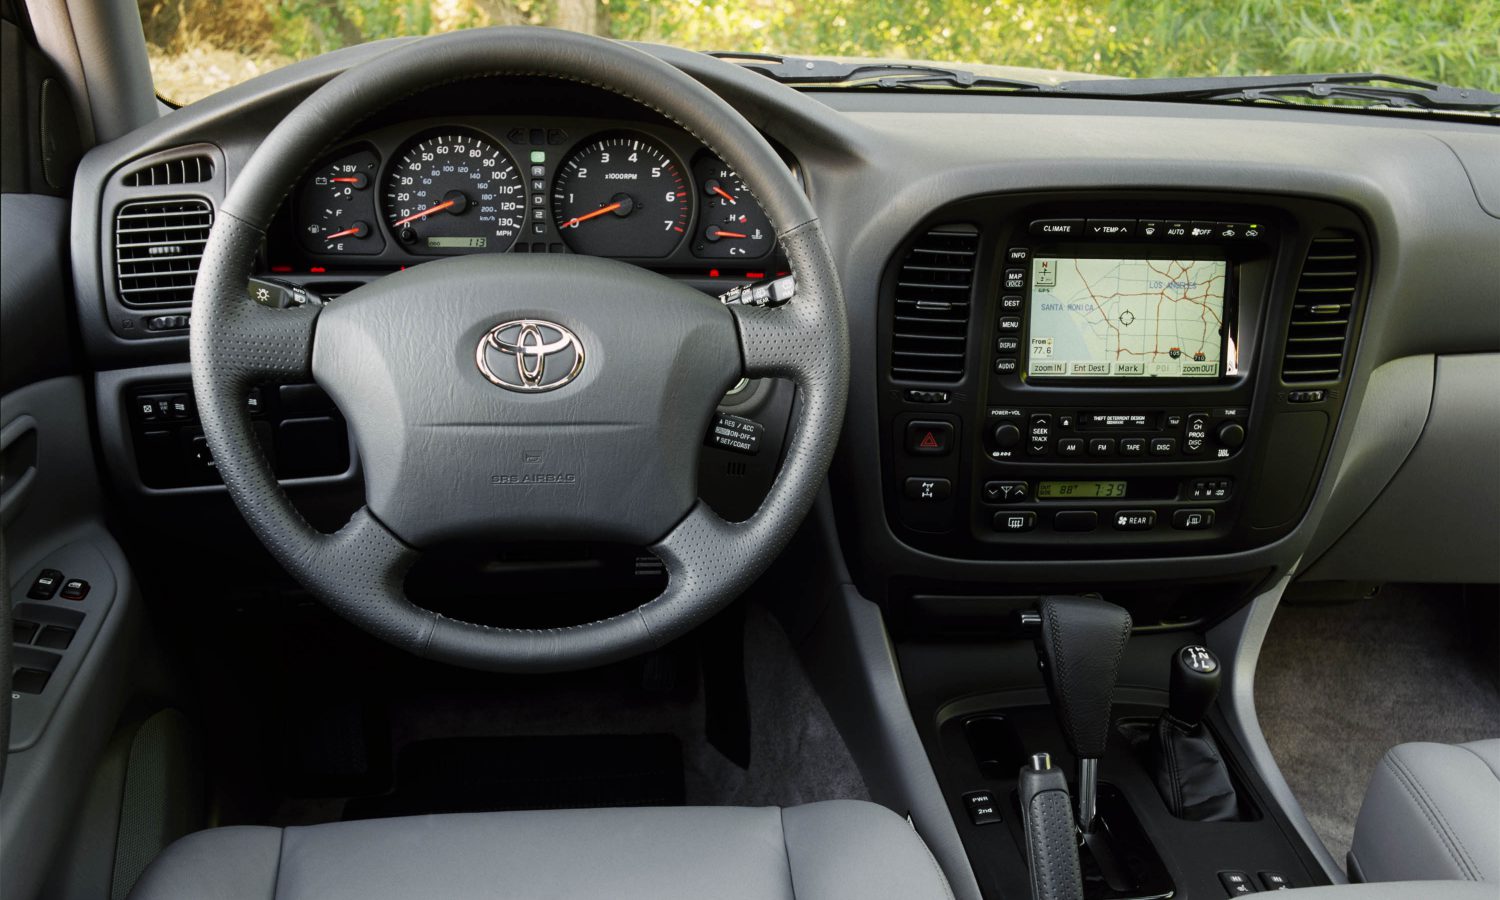 2001 Toyota Land Cruiser interior 005 - Toyota USA Newsroom